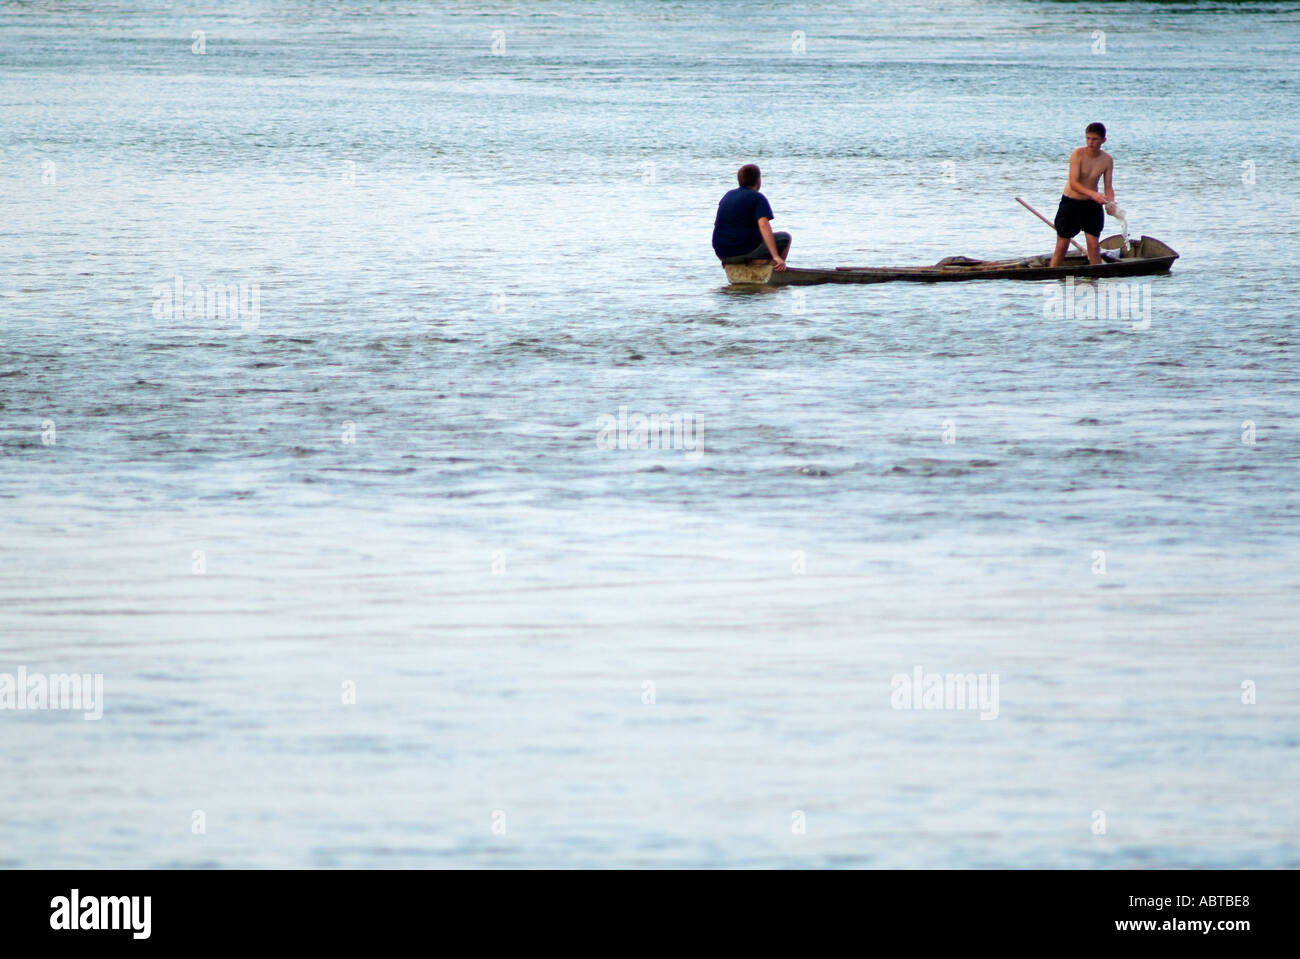 Two Youths Bailing Water From a Small Boat on the River Sava, Bosanski Novi, Bosnia Herzegovina. Stock Photo